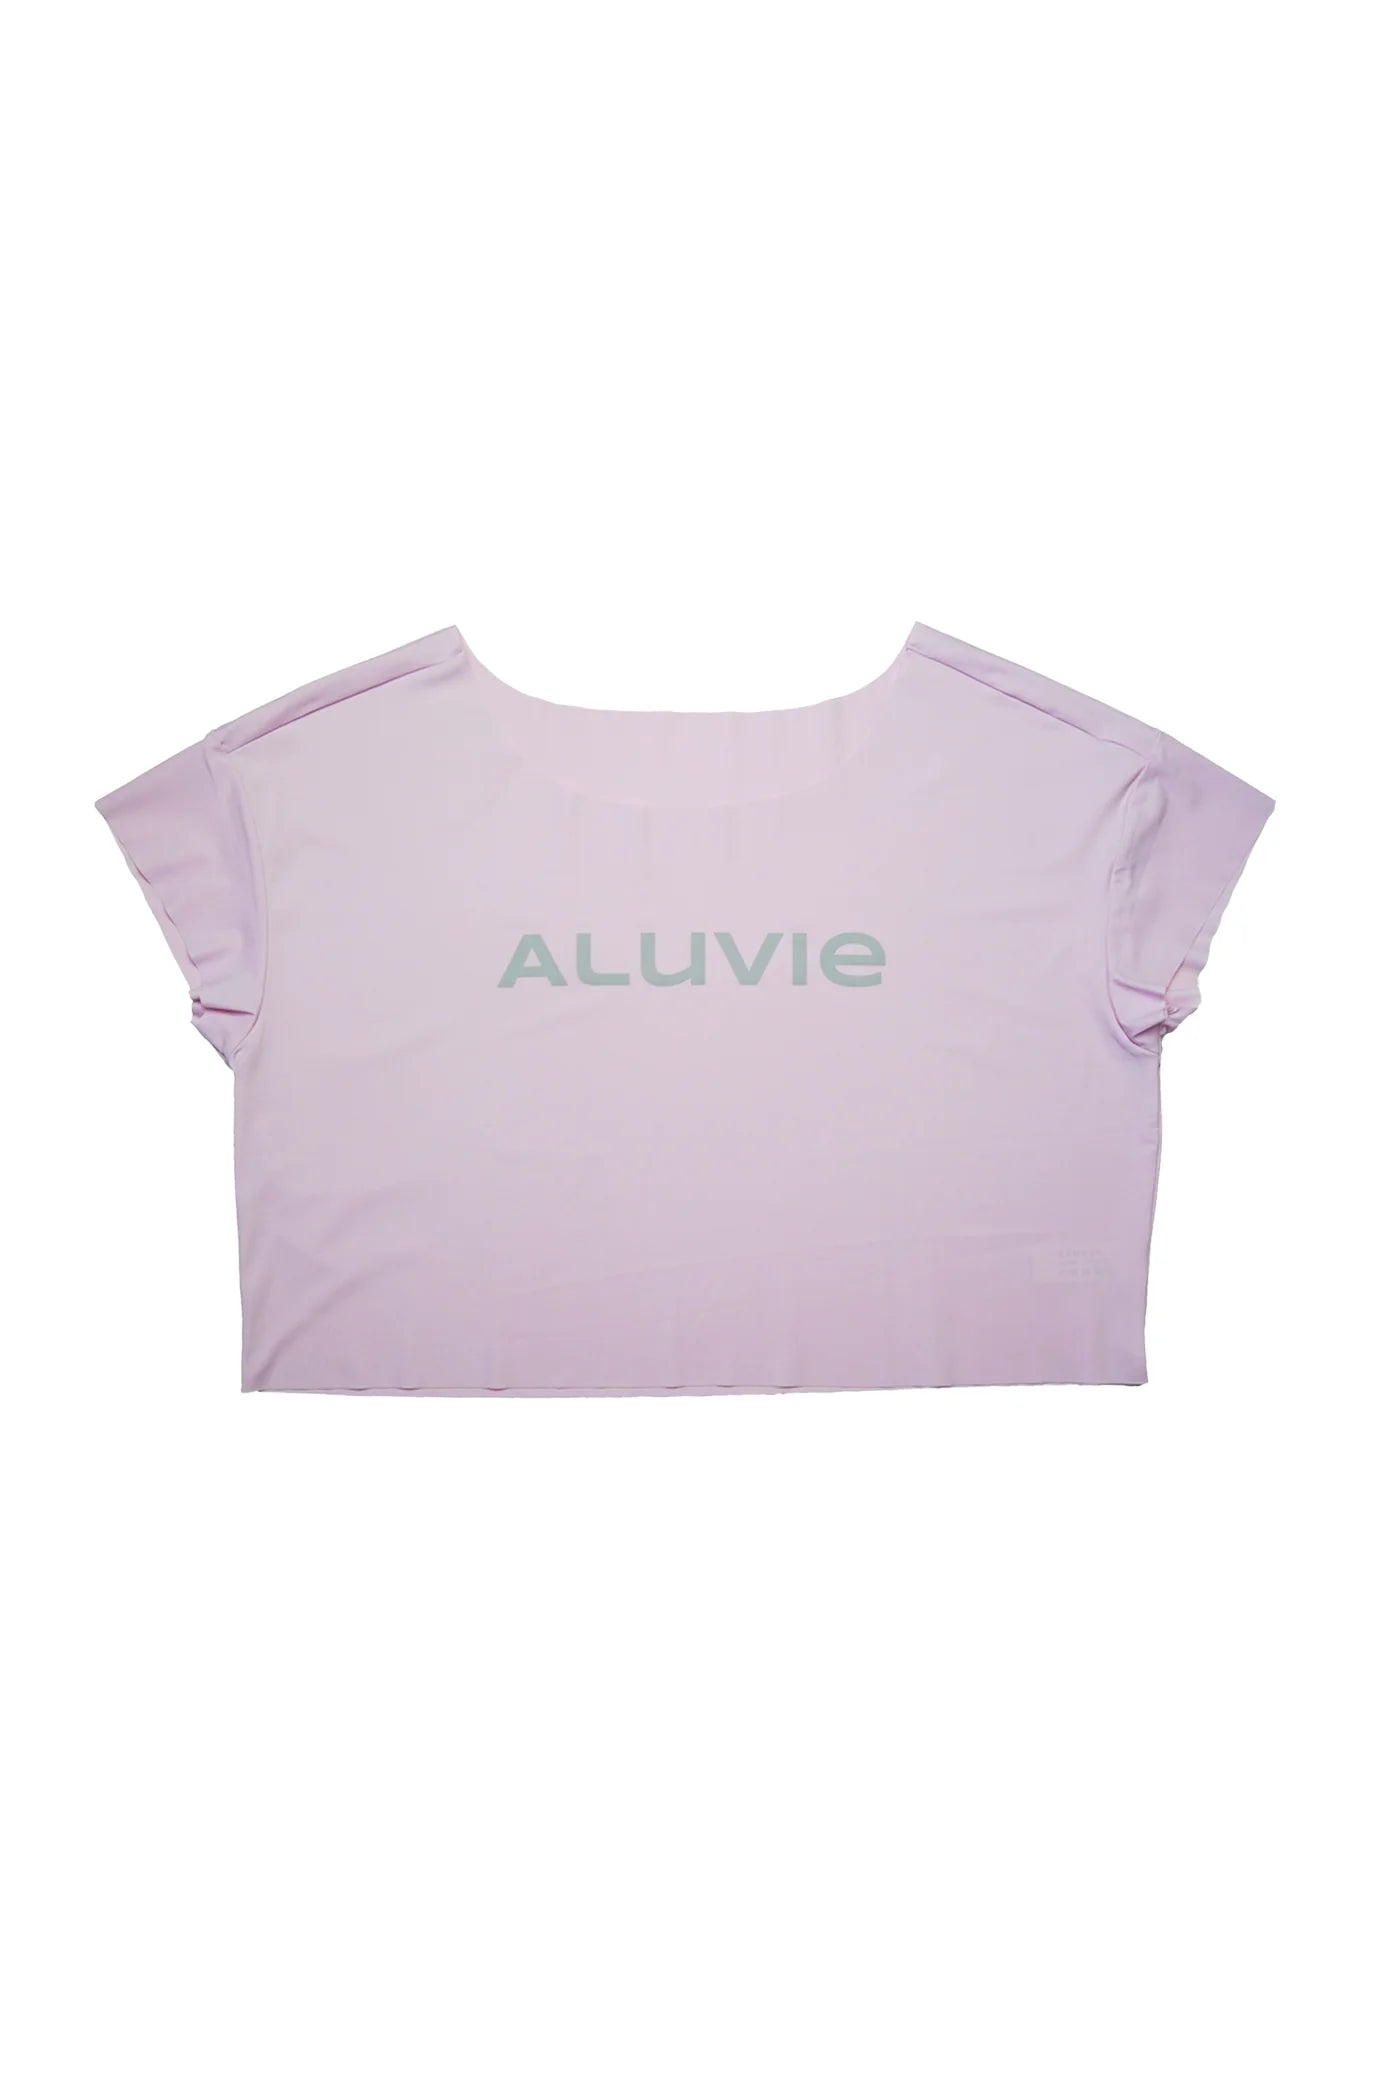 Icee - Aluvie Baby Pink